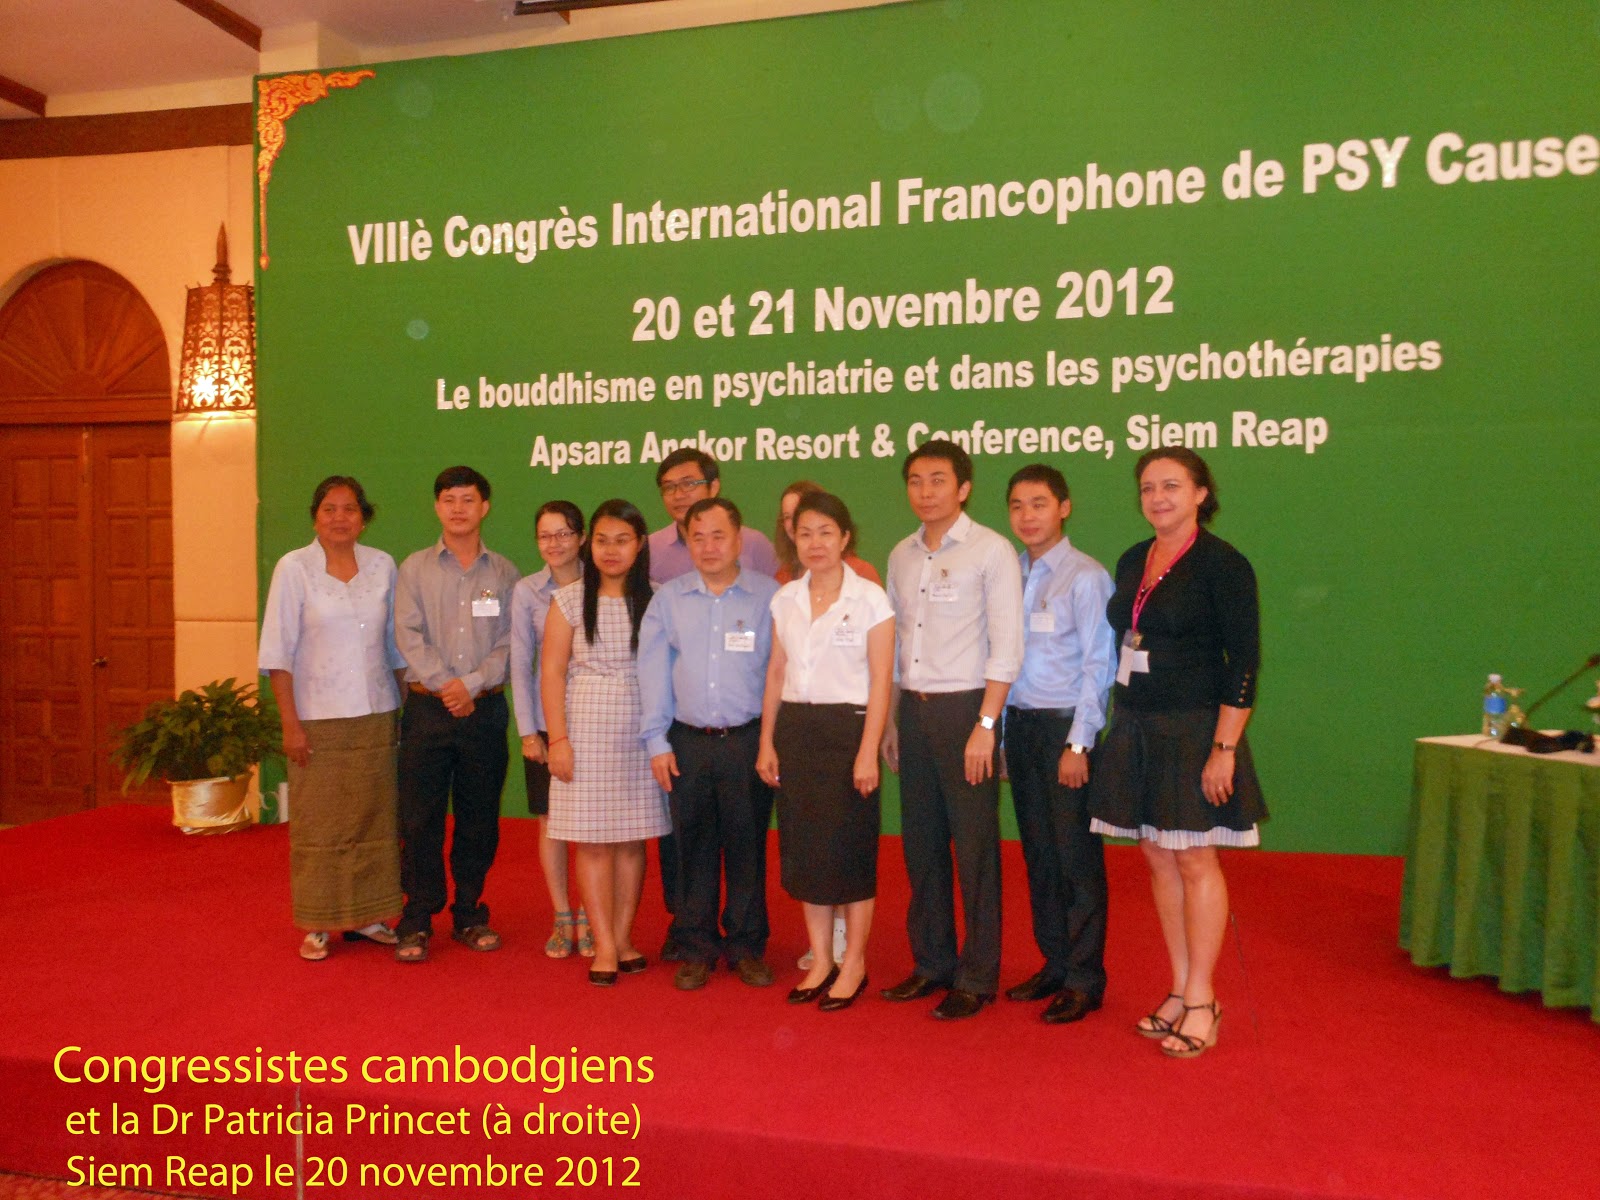 Mouvement francophone fédératif Psy Cause